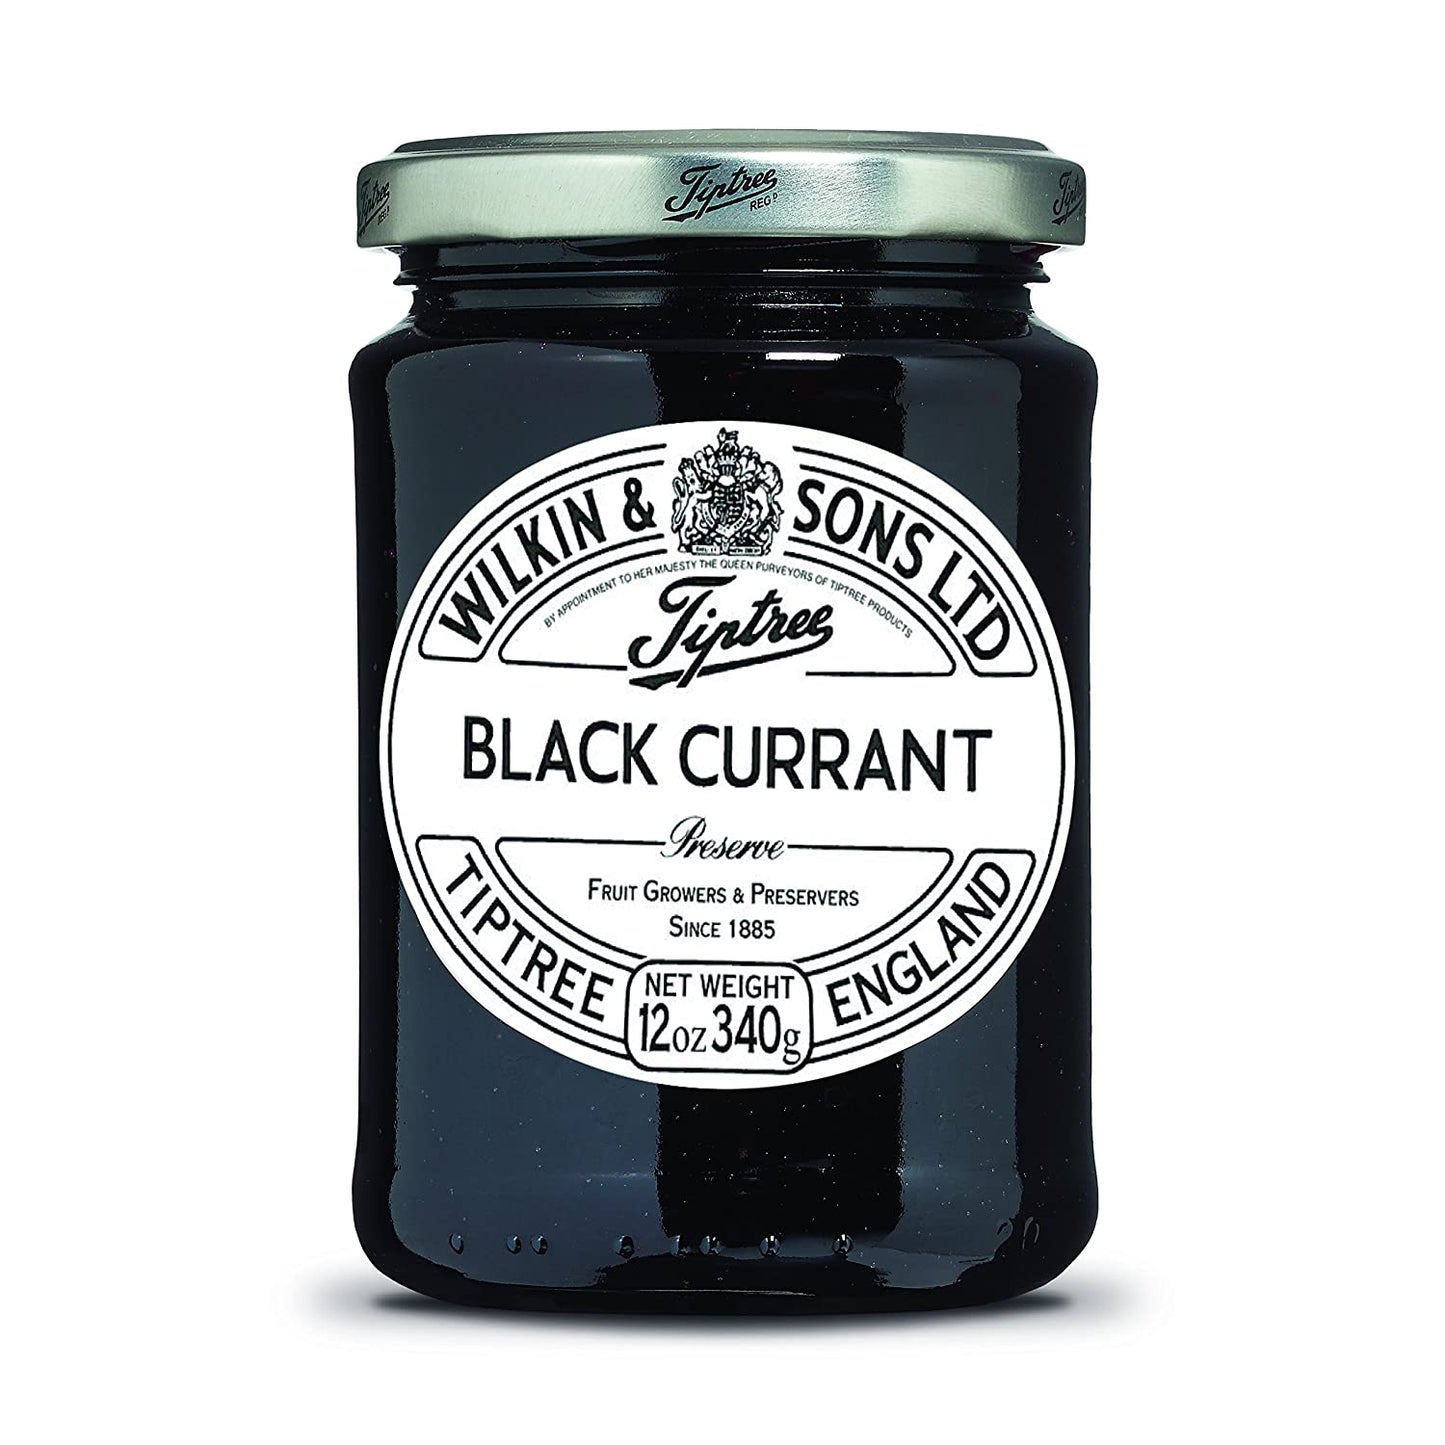 Tiptree Black Currant Preserve, 12 Ounce Jar